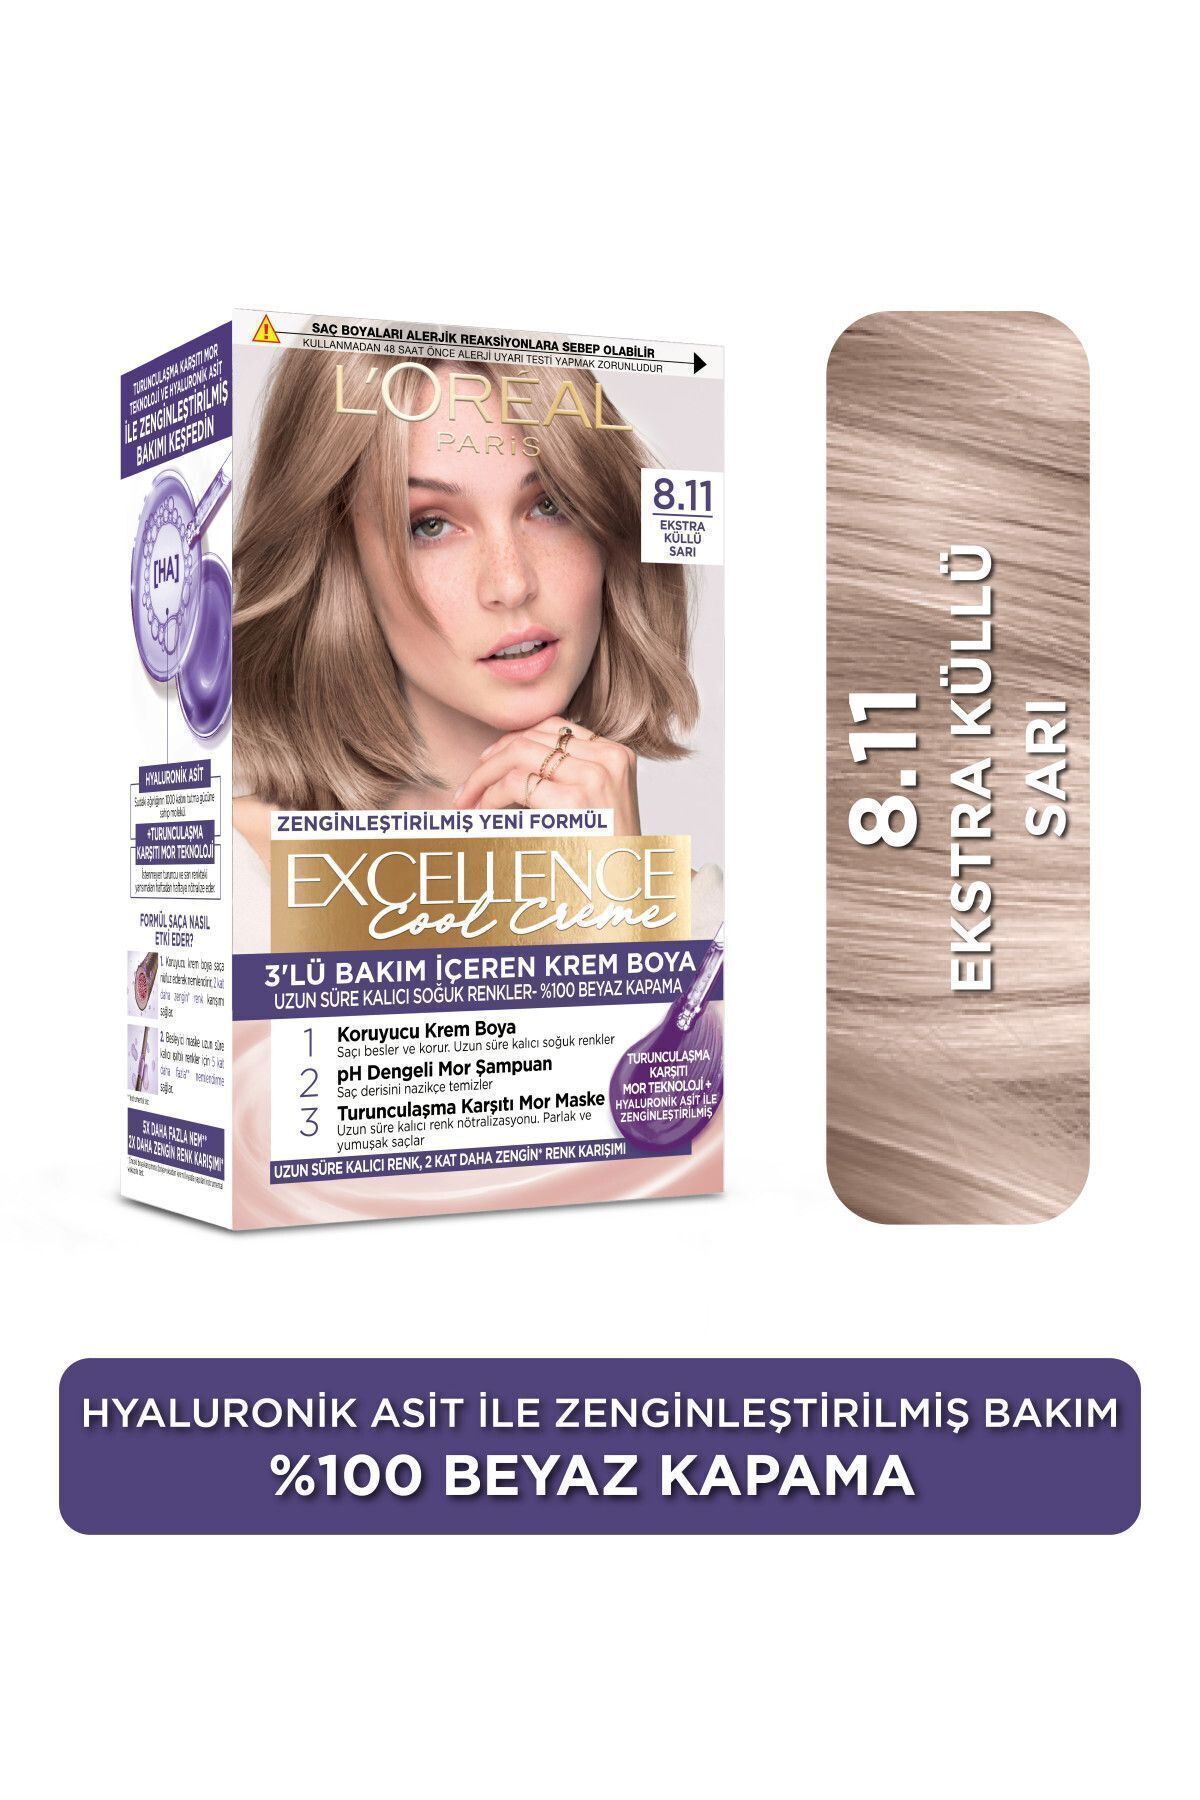 L'Oreal Paris L’oréal Paris Excellence Cool Creme Saç Boyası – 8.11 Ekstra Küllü Sarı